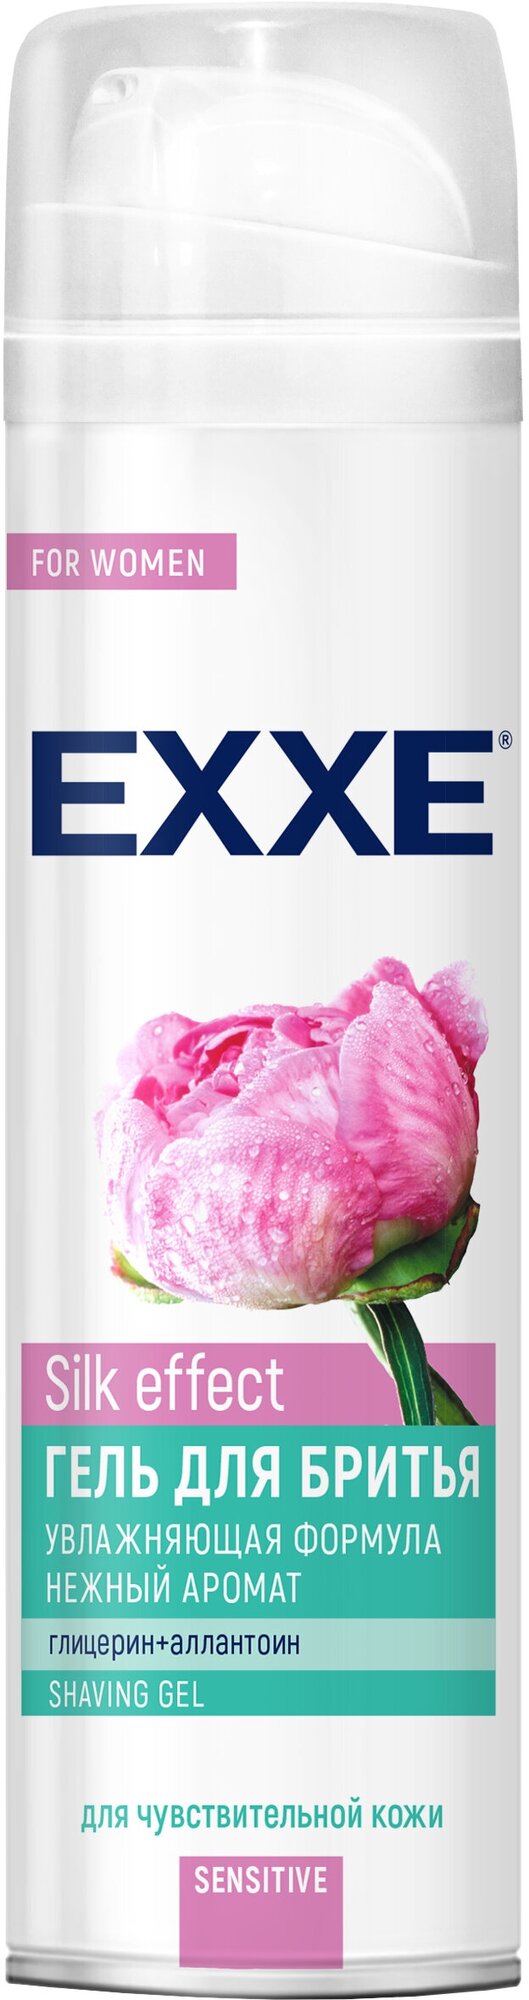 EXXE Гель для бритья Sensitive Silk effect 200 мл (женский)